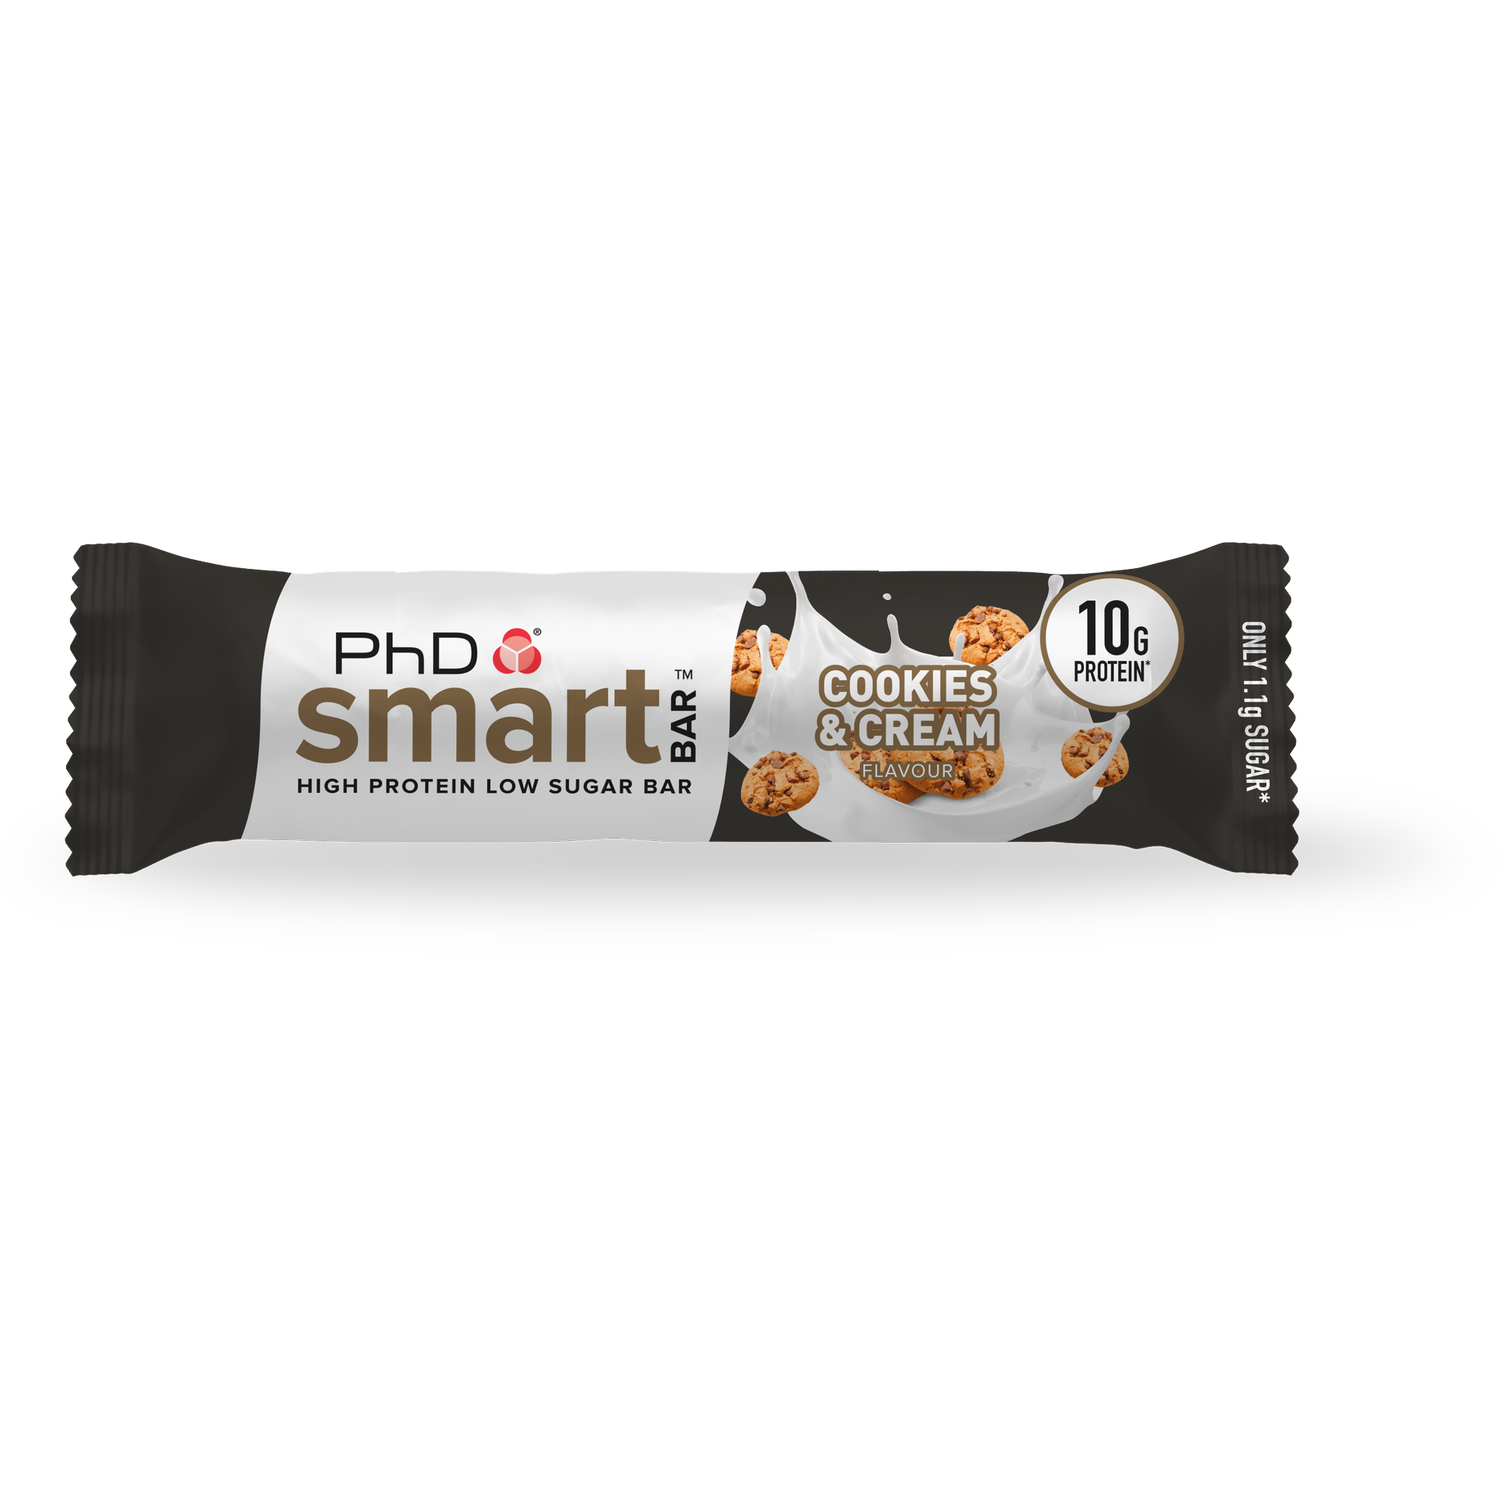 PhD Smart Bar Cookies & Cream 32g - Black Image